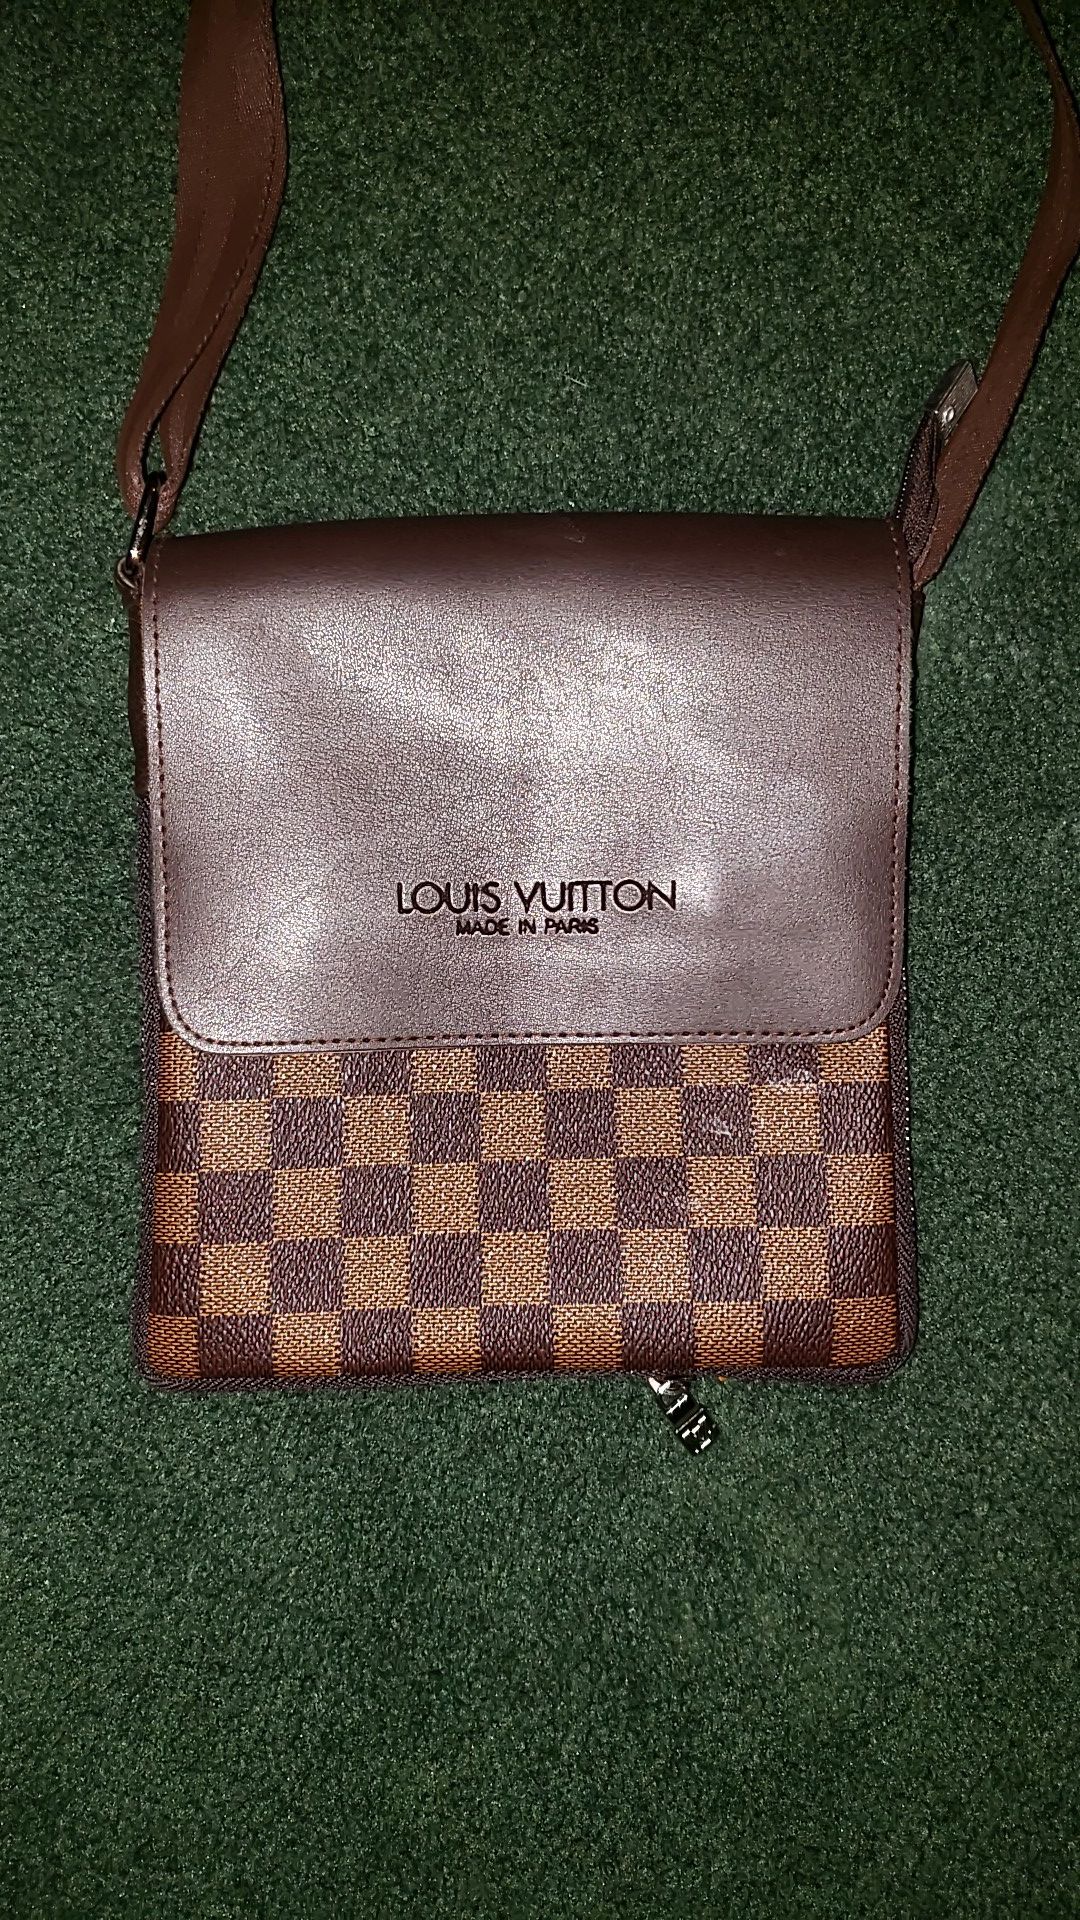 Louis Vuitton Made in Paris